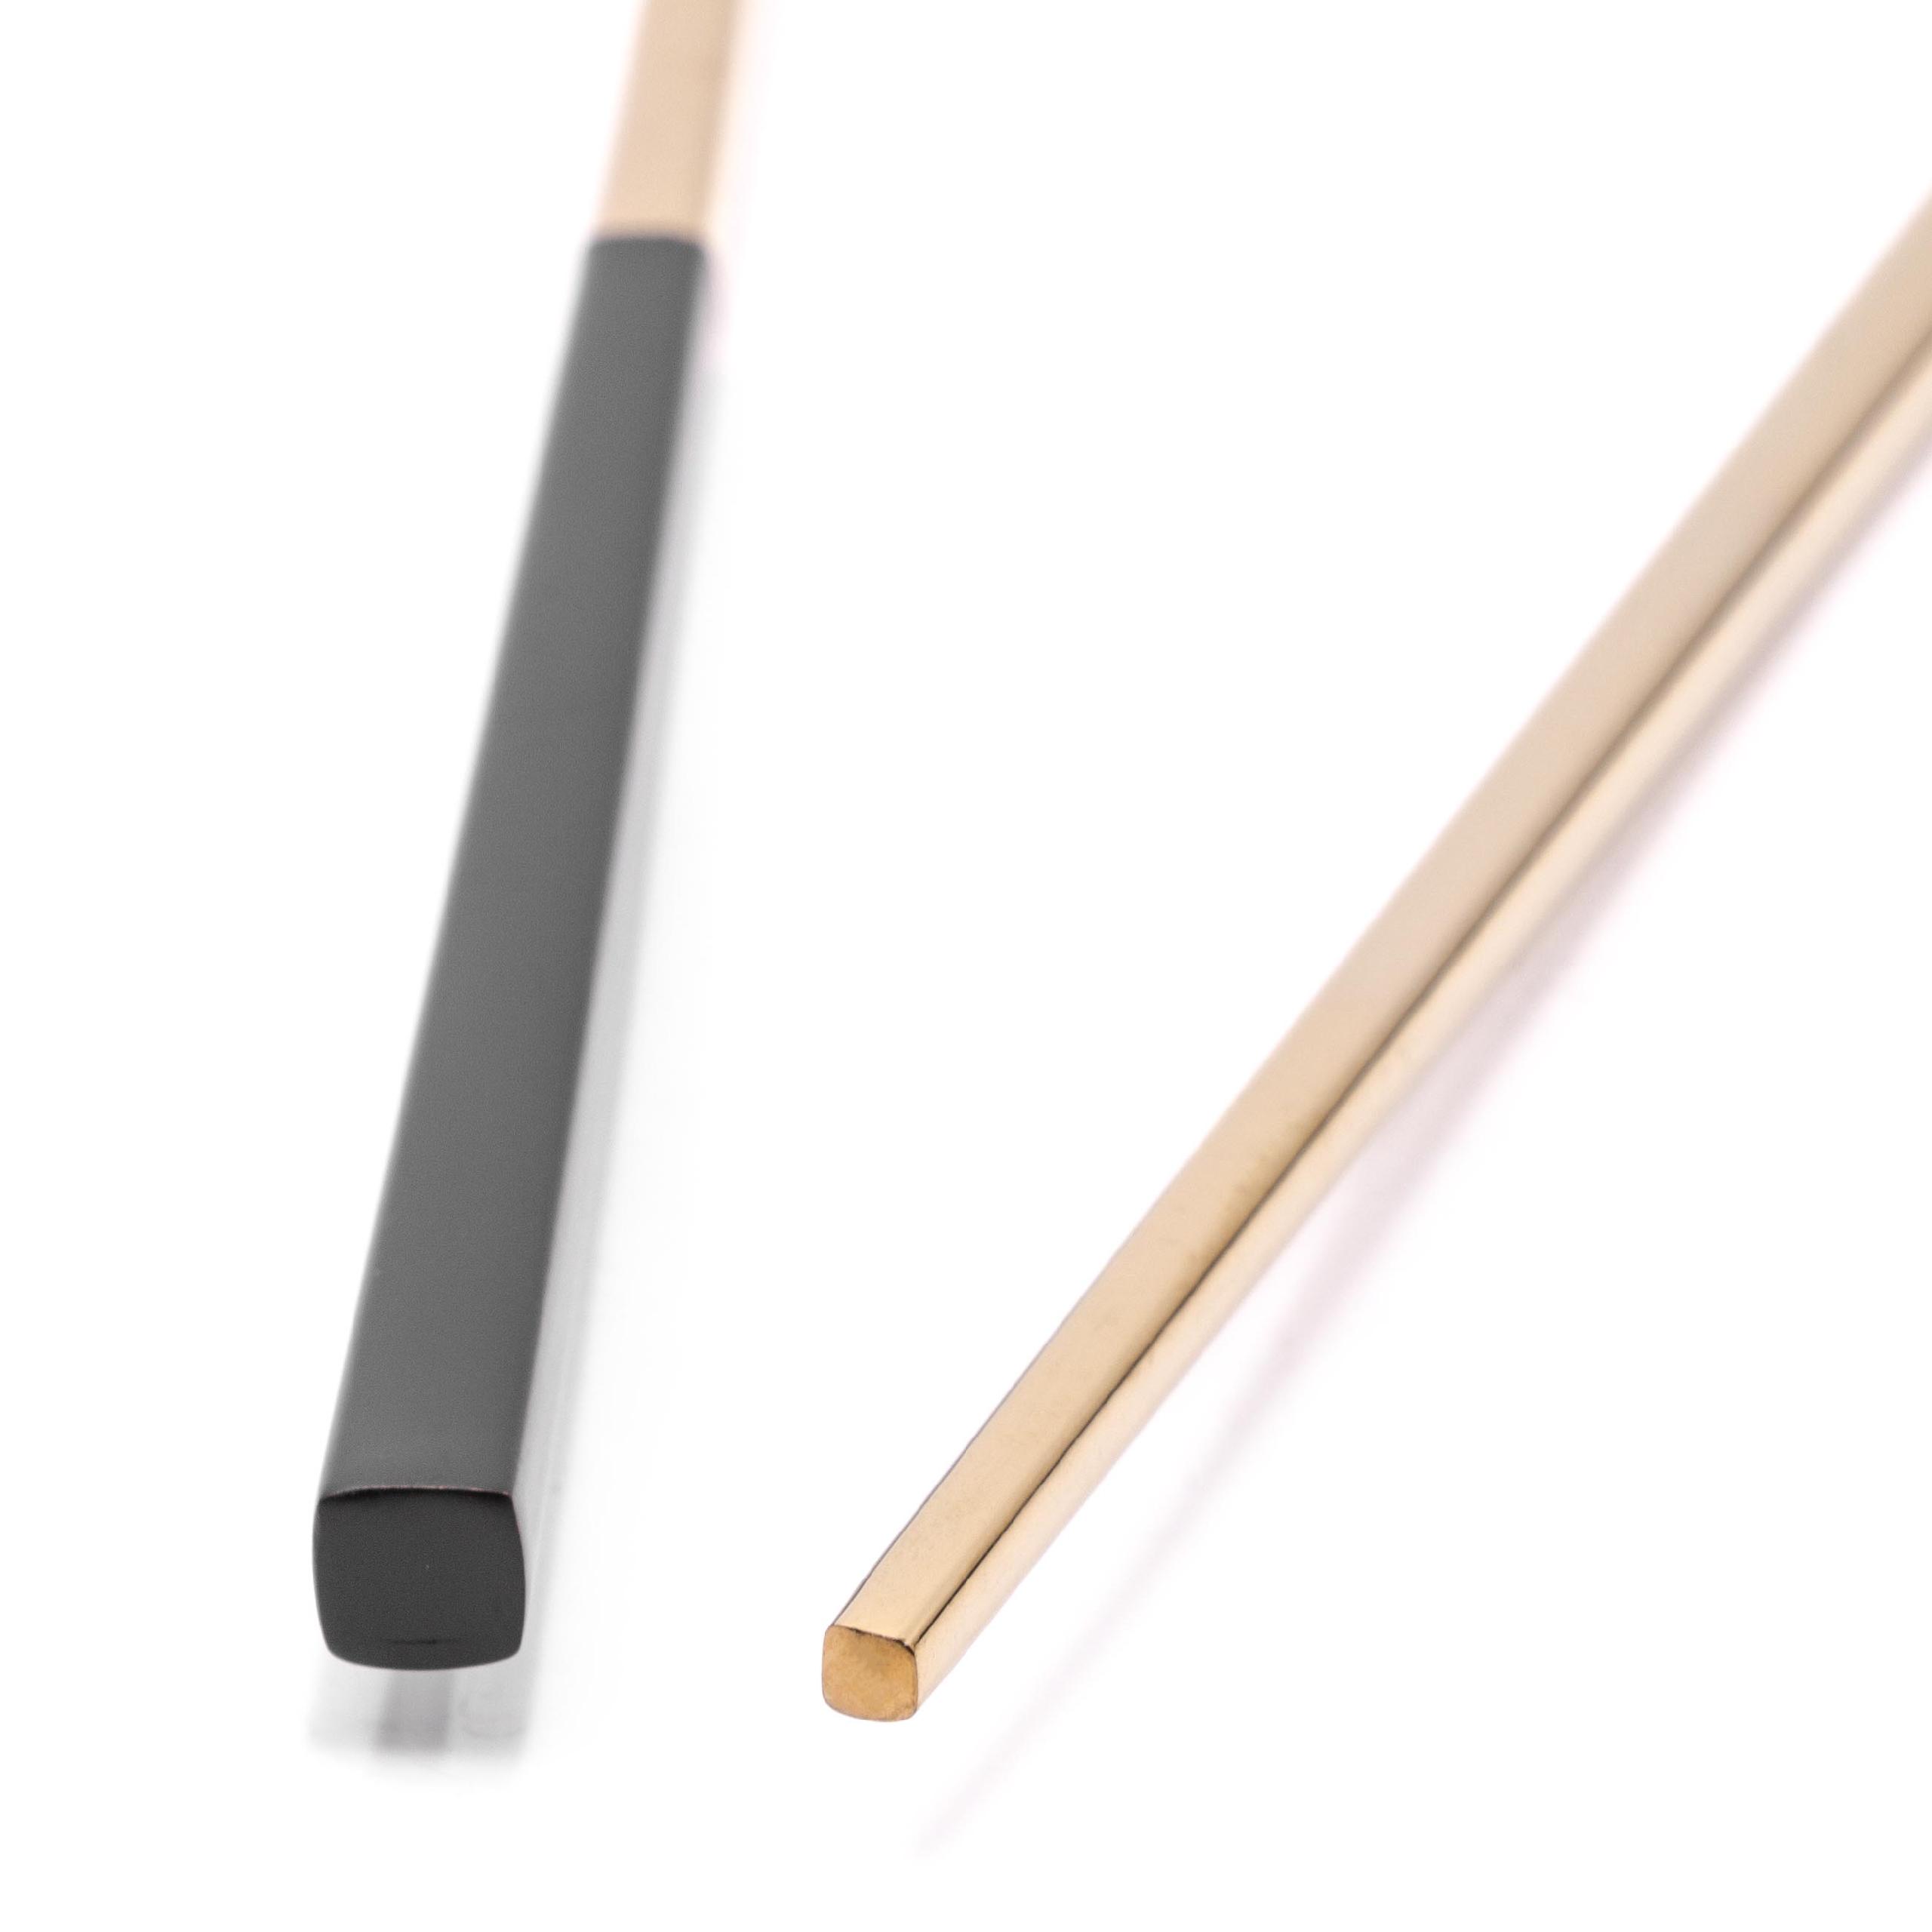 Chopstick Set (1 Pair) - Stainless Steel, gold, black, 23 cm long, Reusable